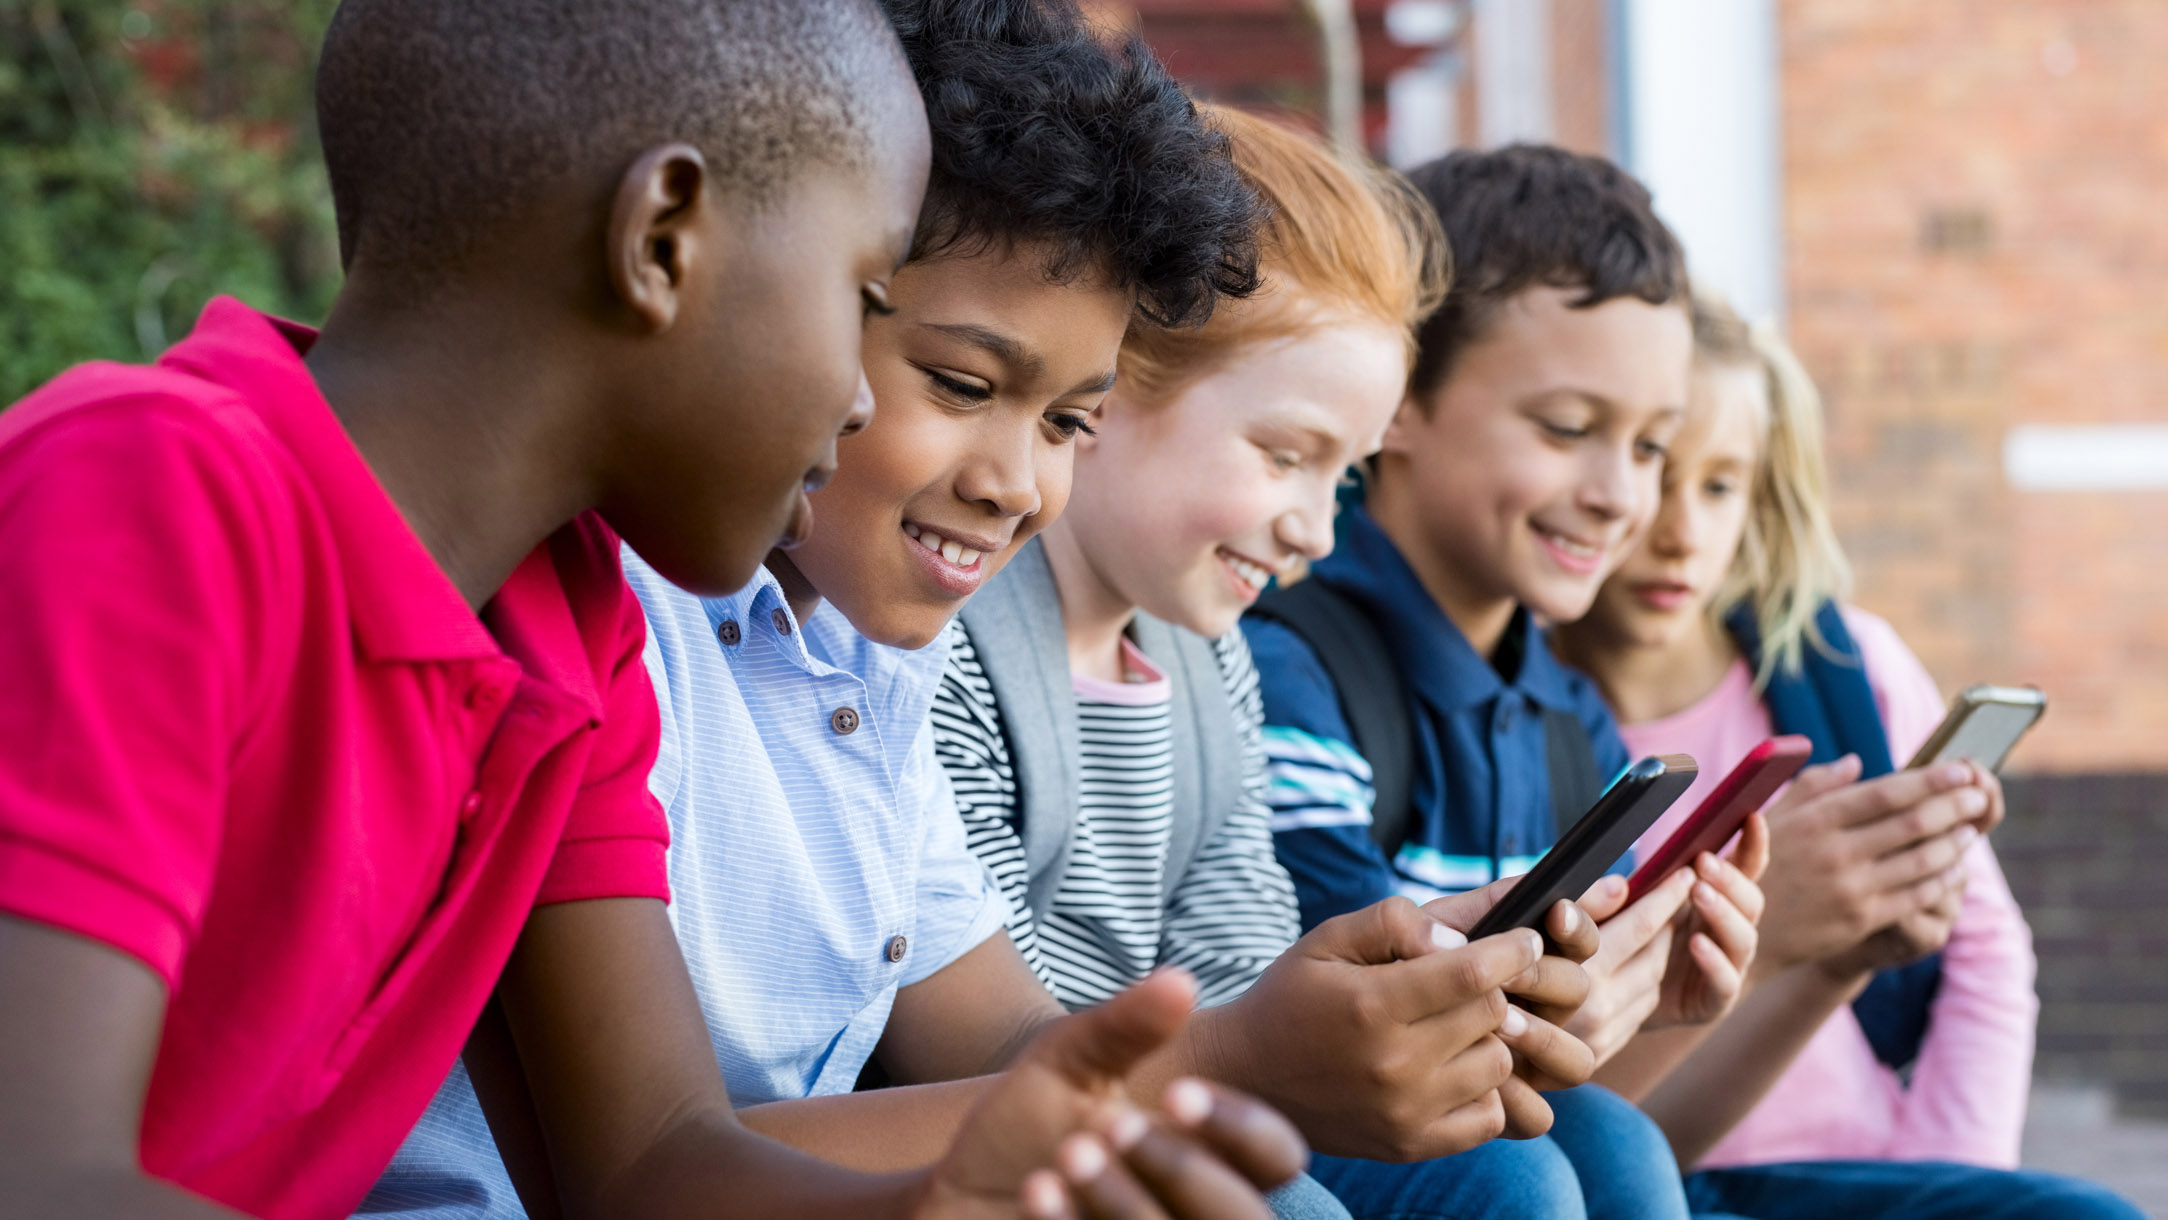 Five children viewing cellphones